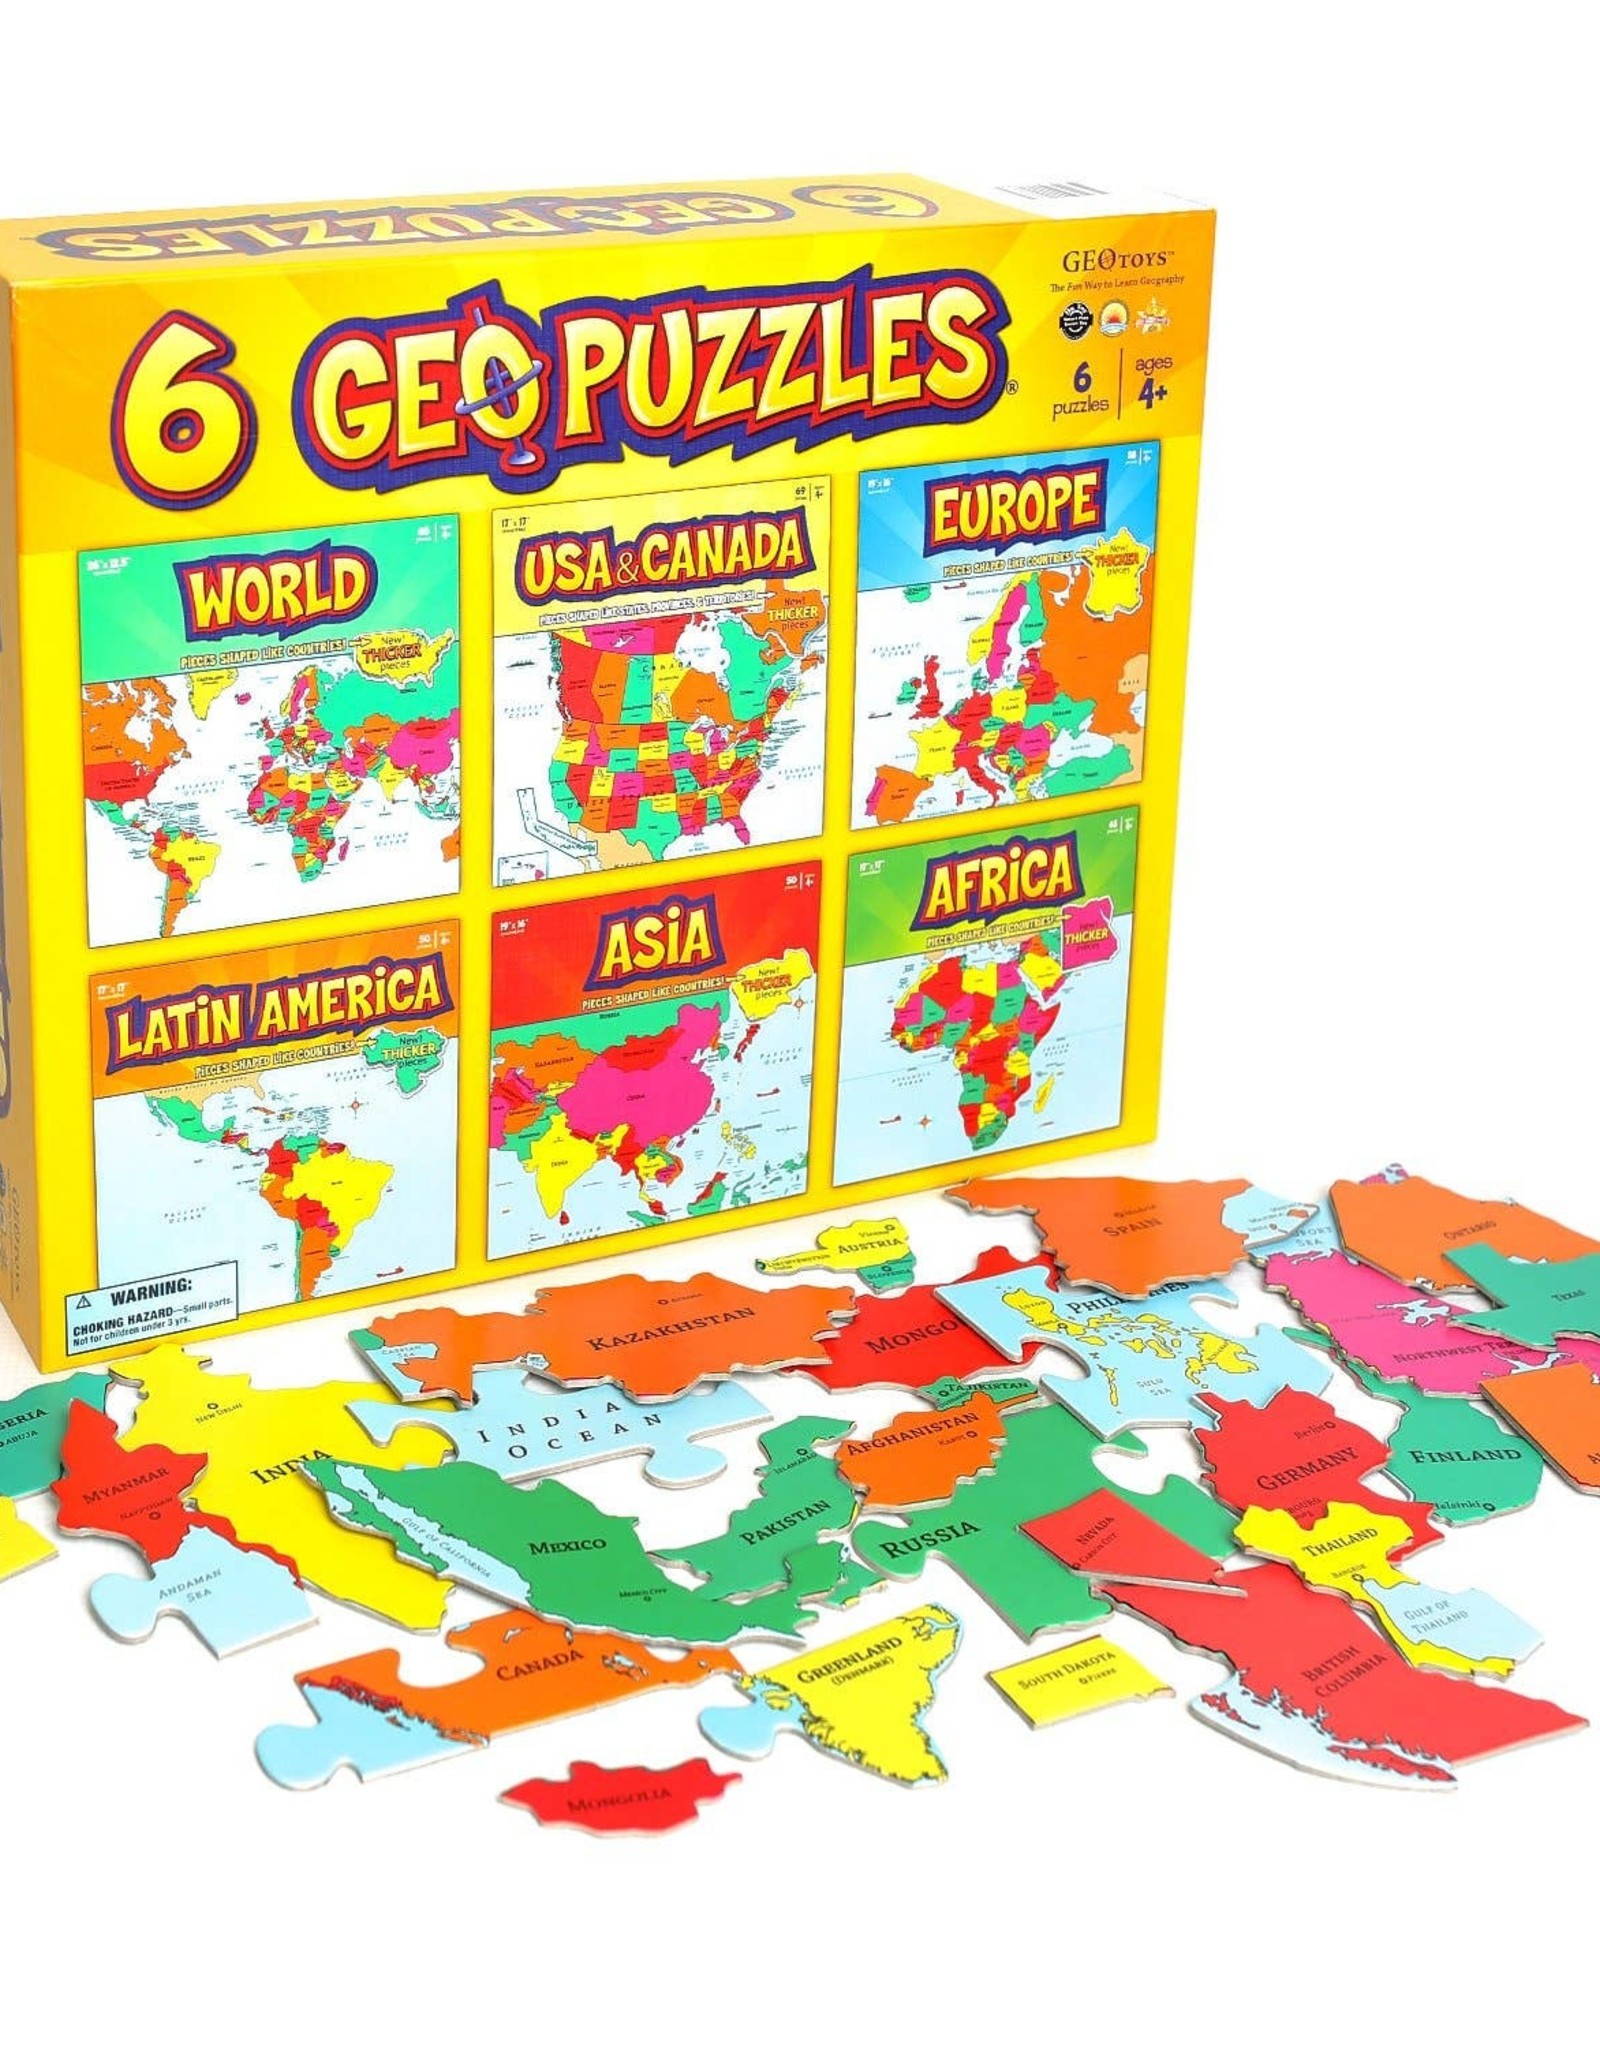 Geotoys 6 GeoPuzzles - One Box Puzzle